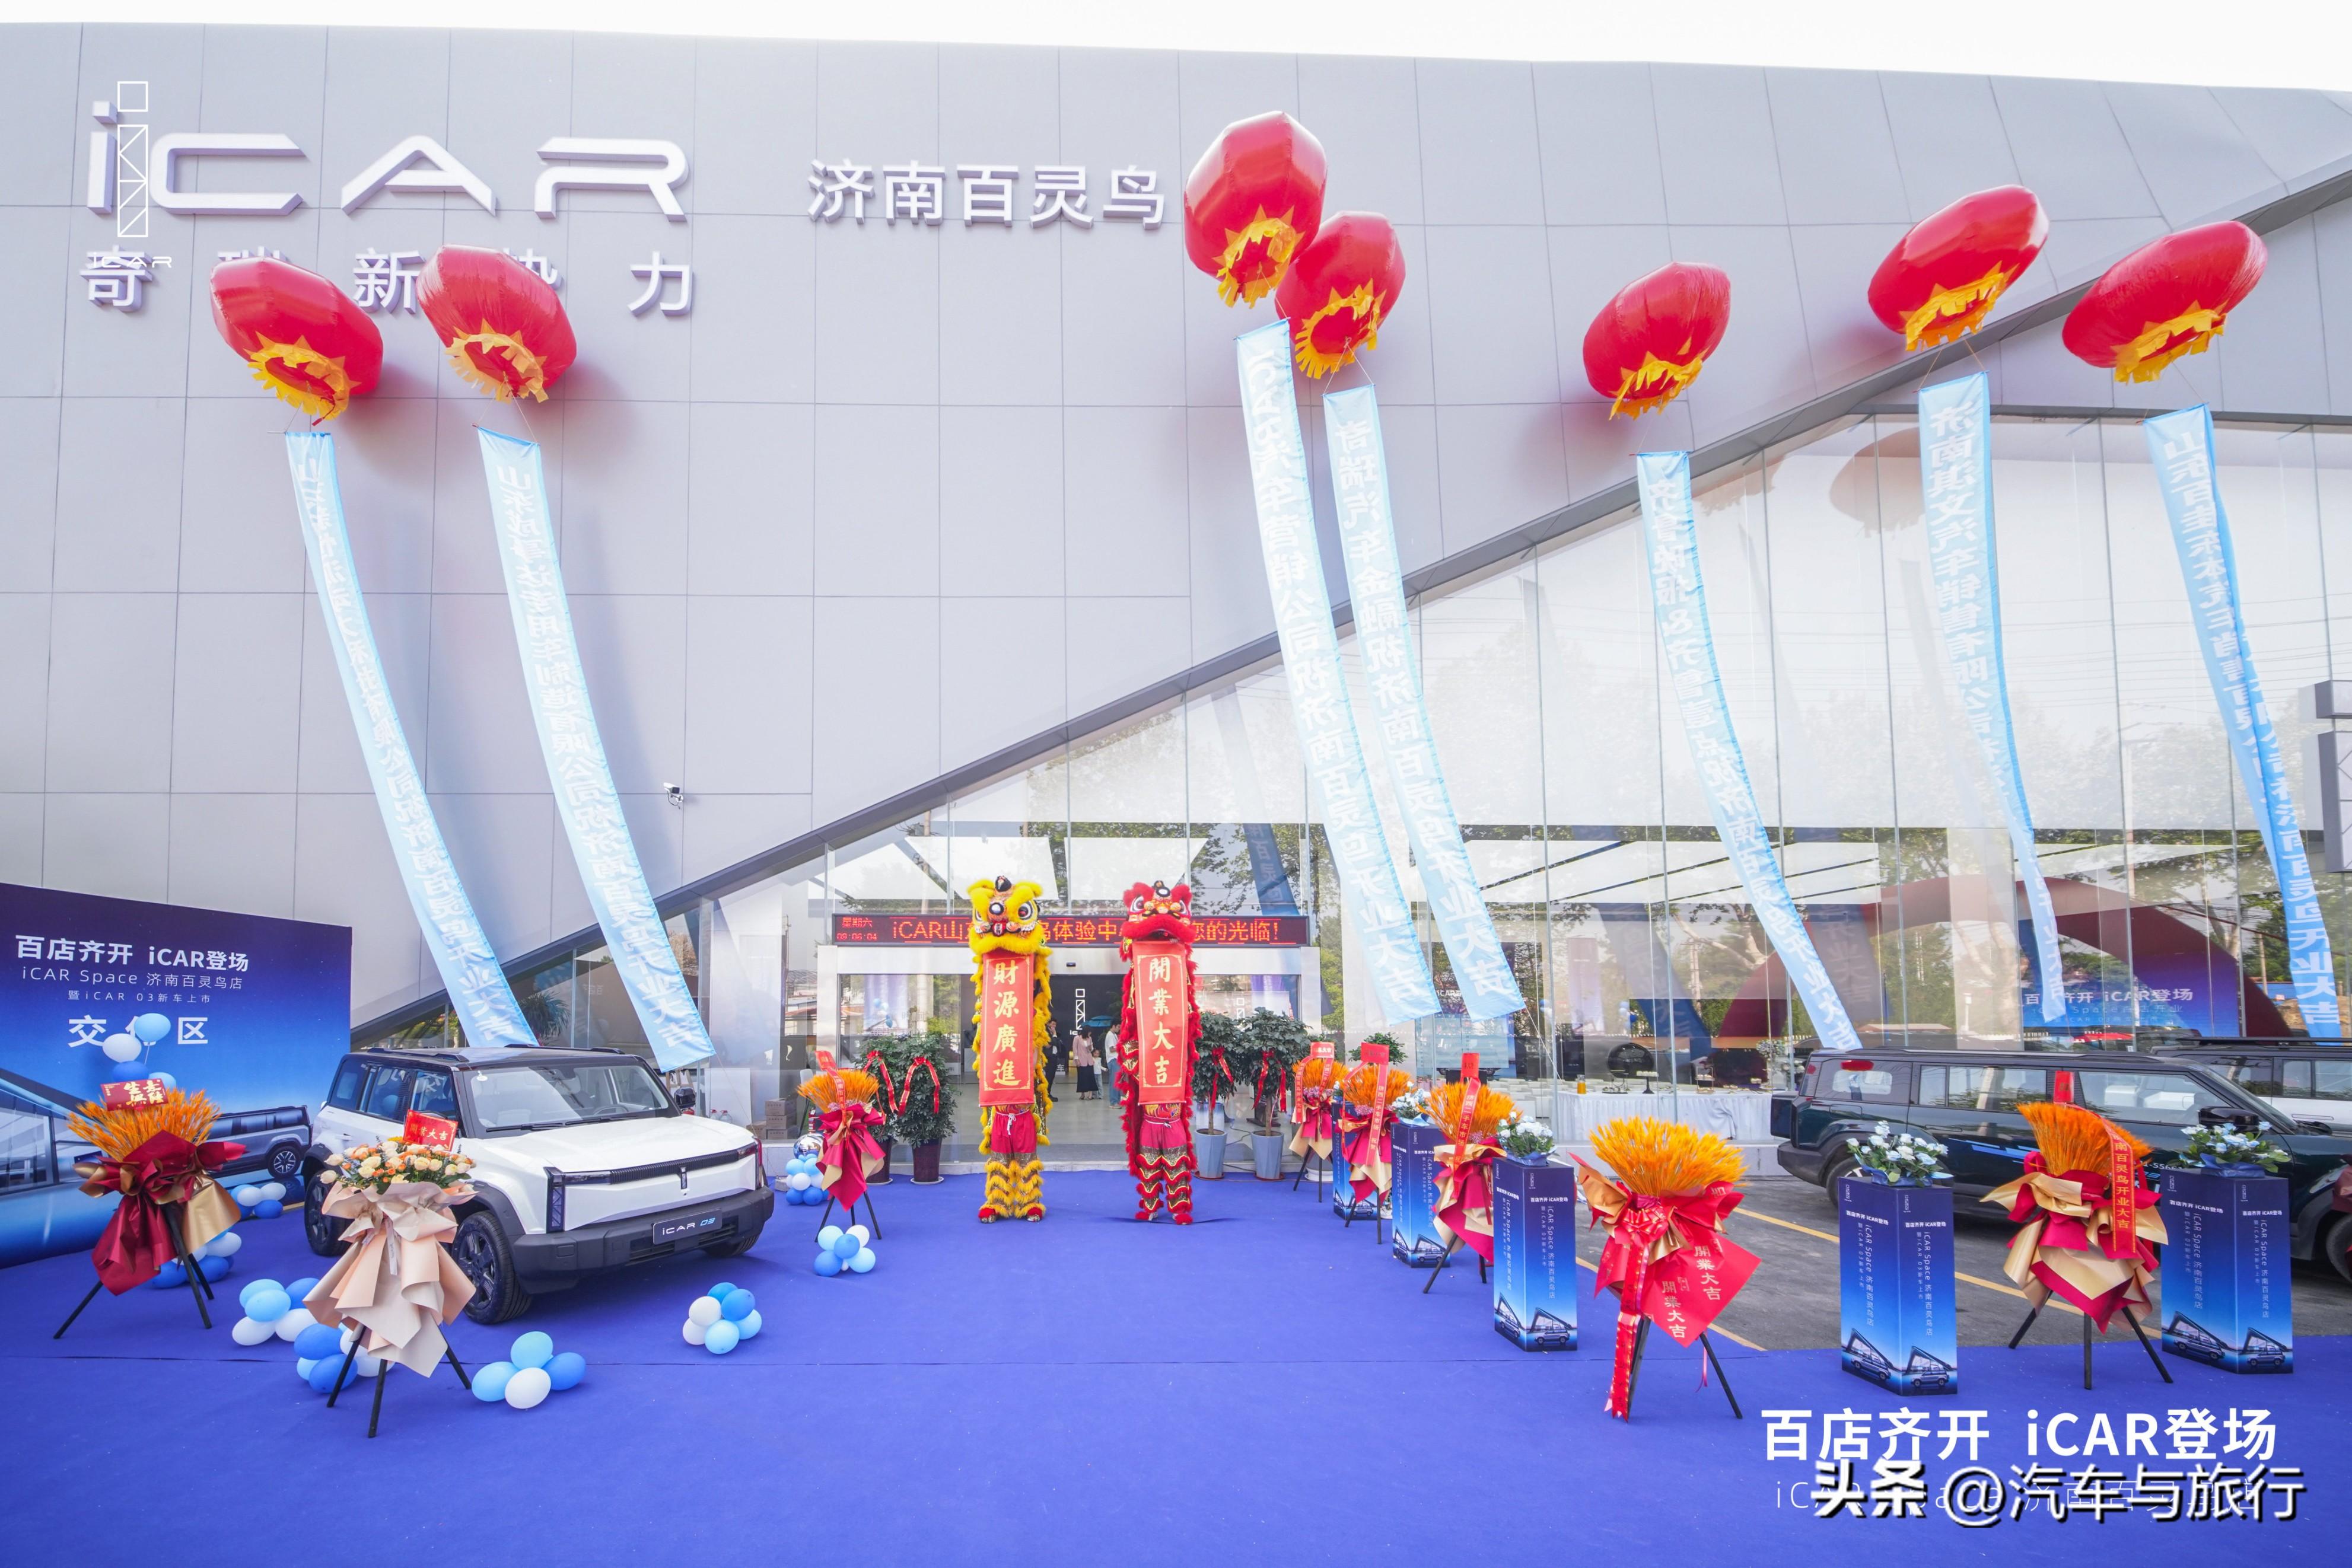 iCAR Space 济南百灵鸟店成功开业，携手iCAR 03与用户最强“链接”